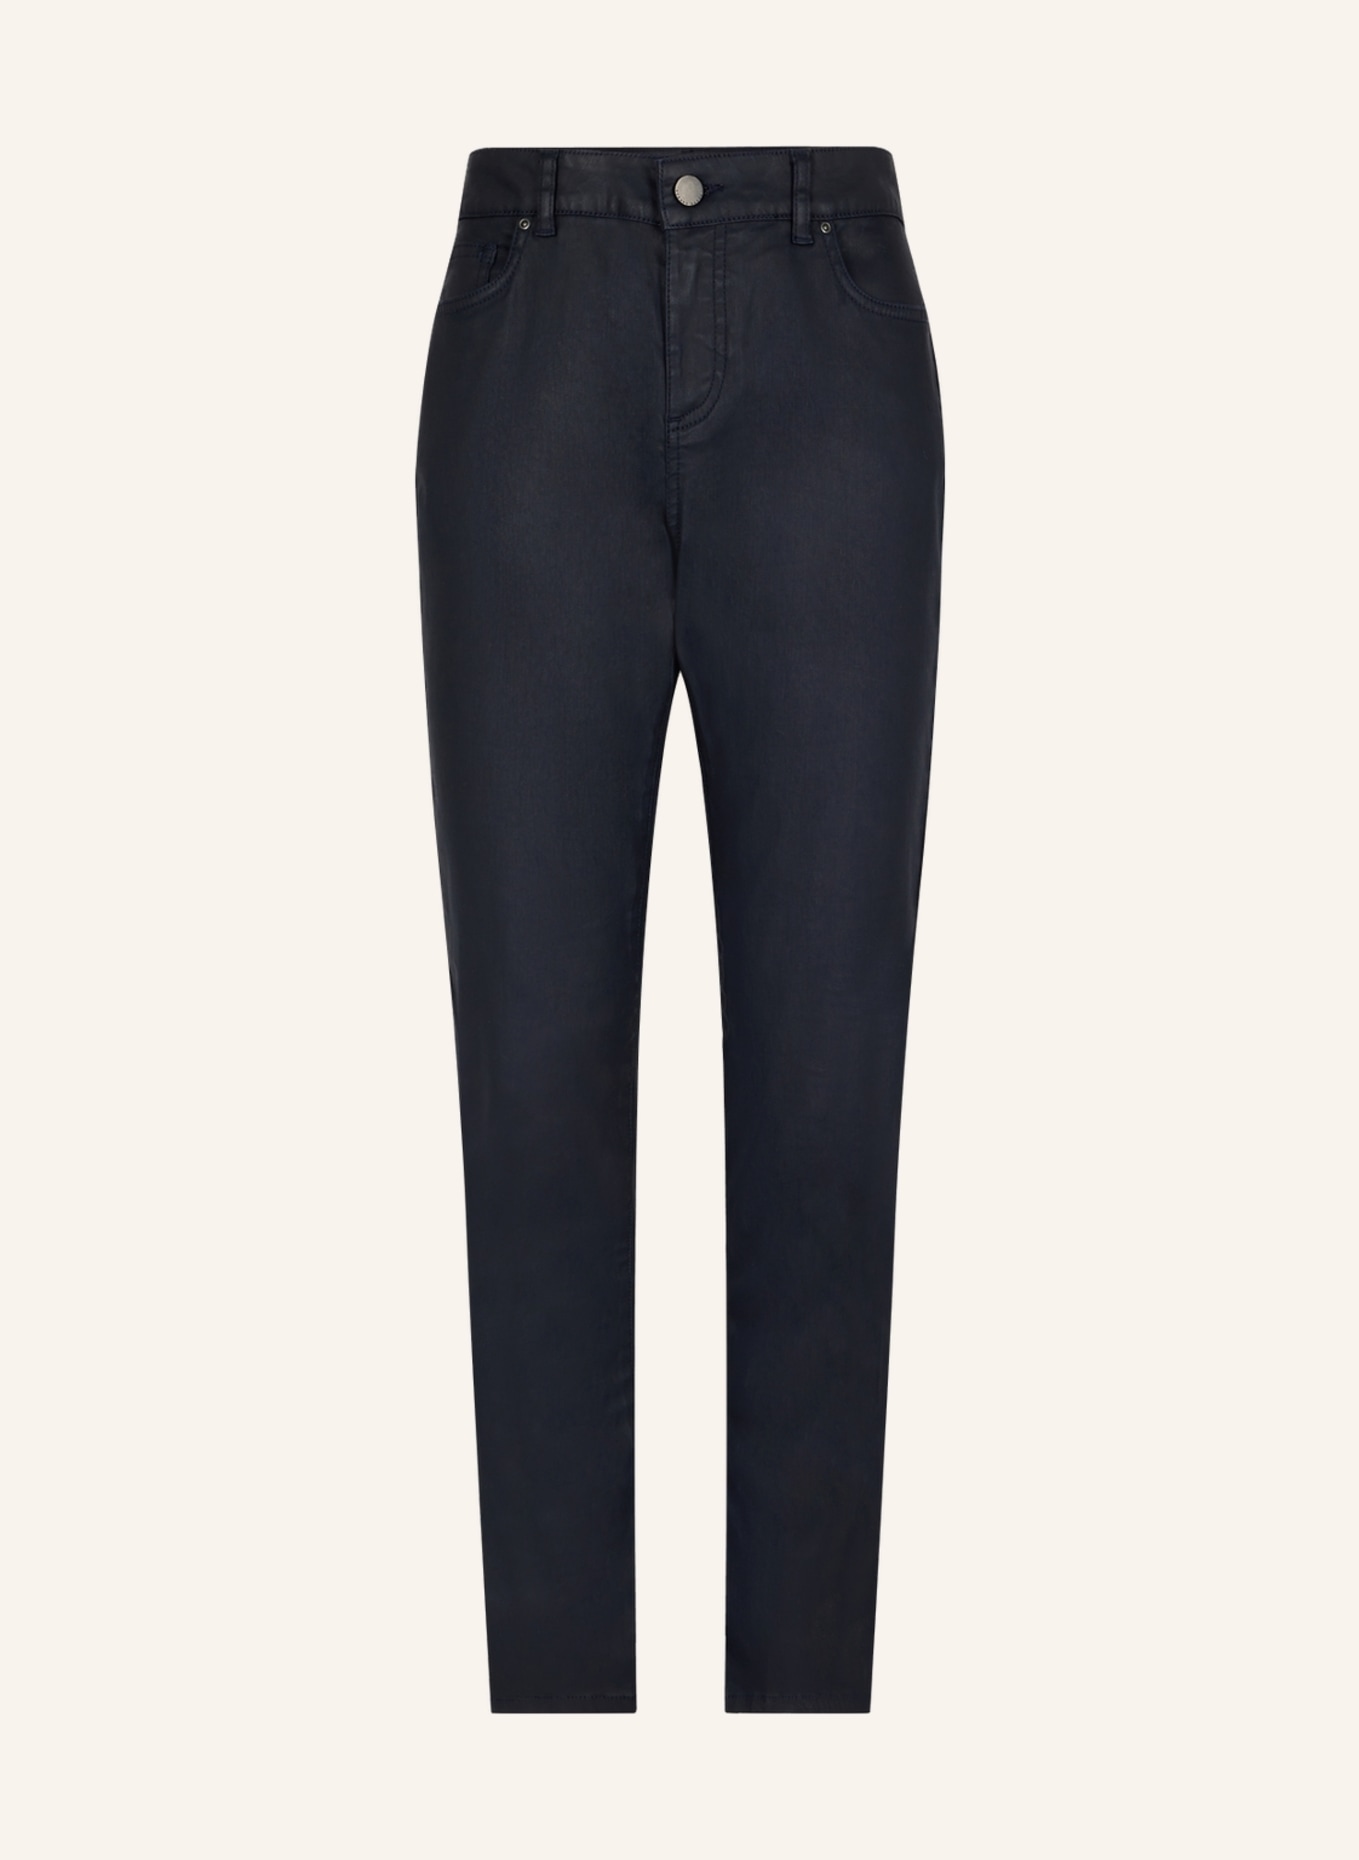 GERARD DAREL Jeans CINDY, Farbe: DUNKELBLAU (Bild 1)